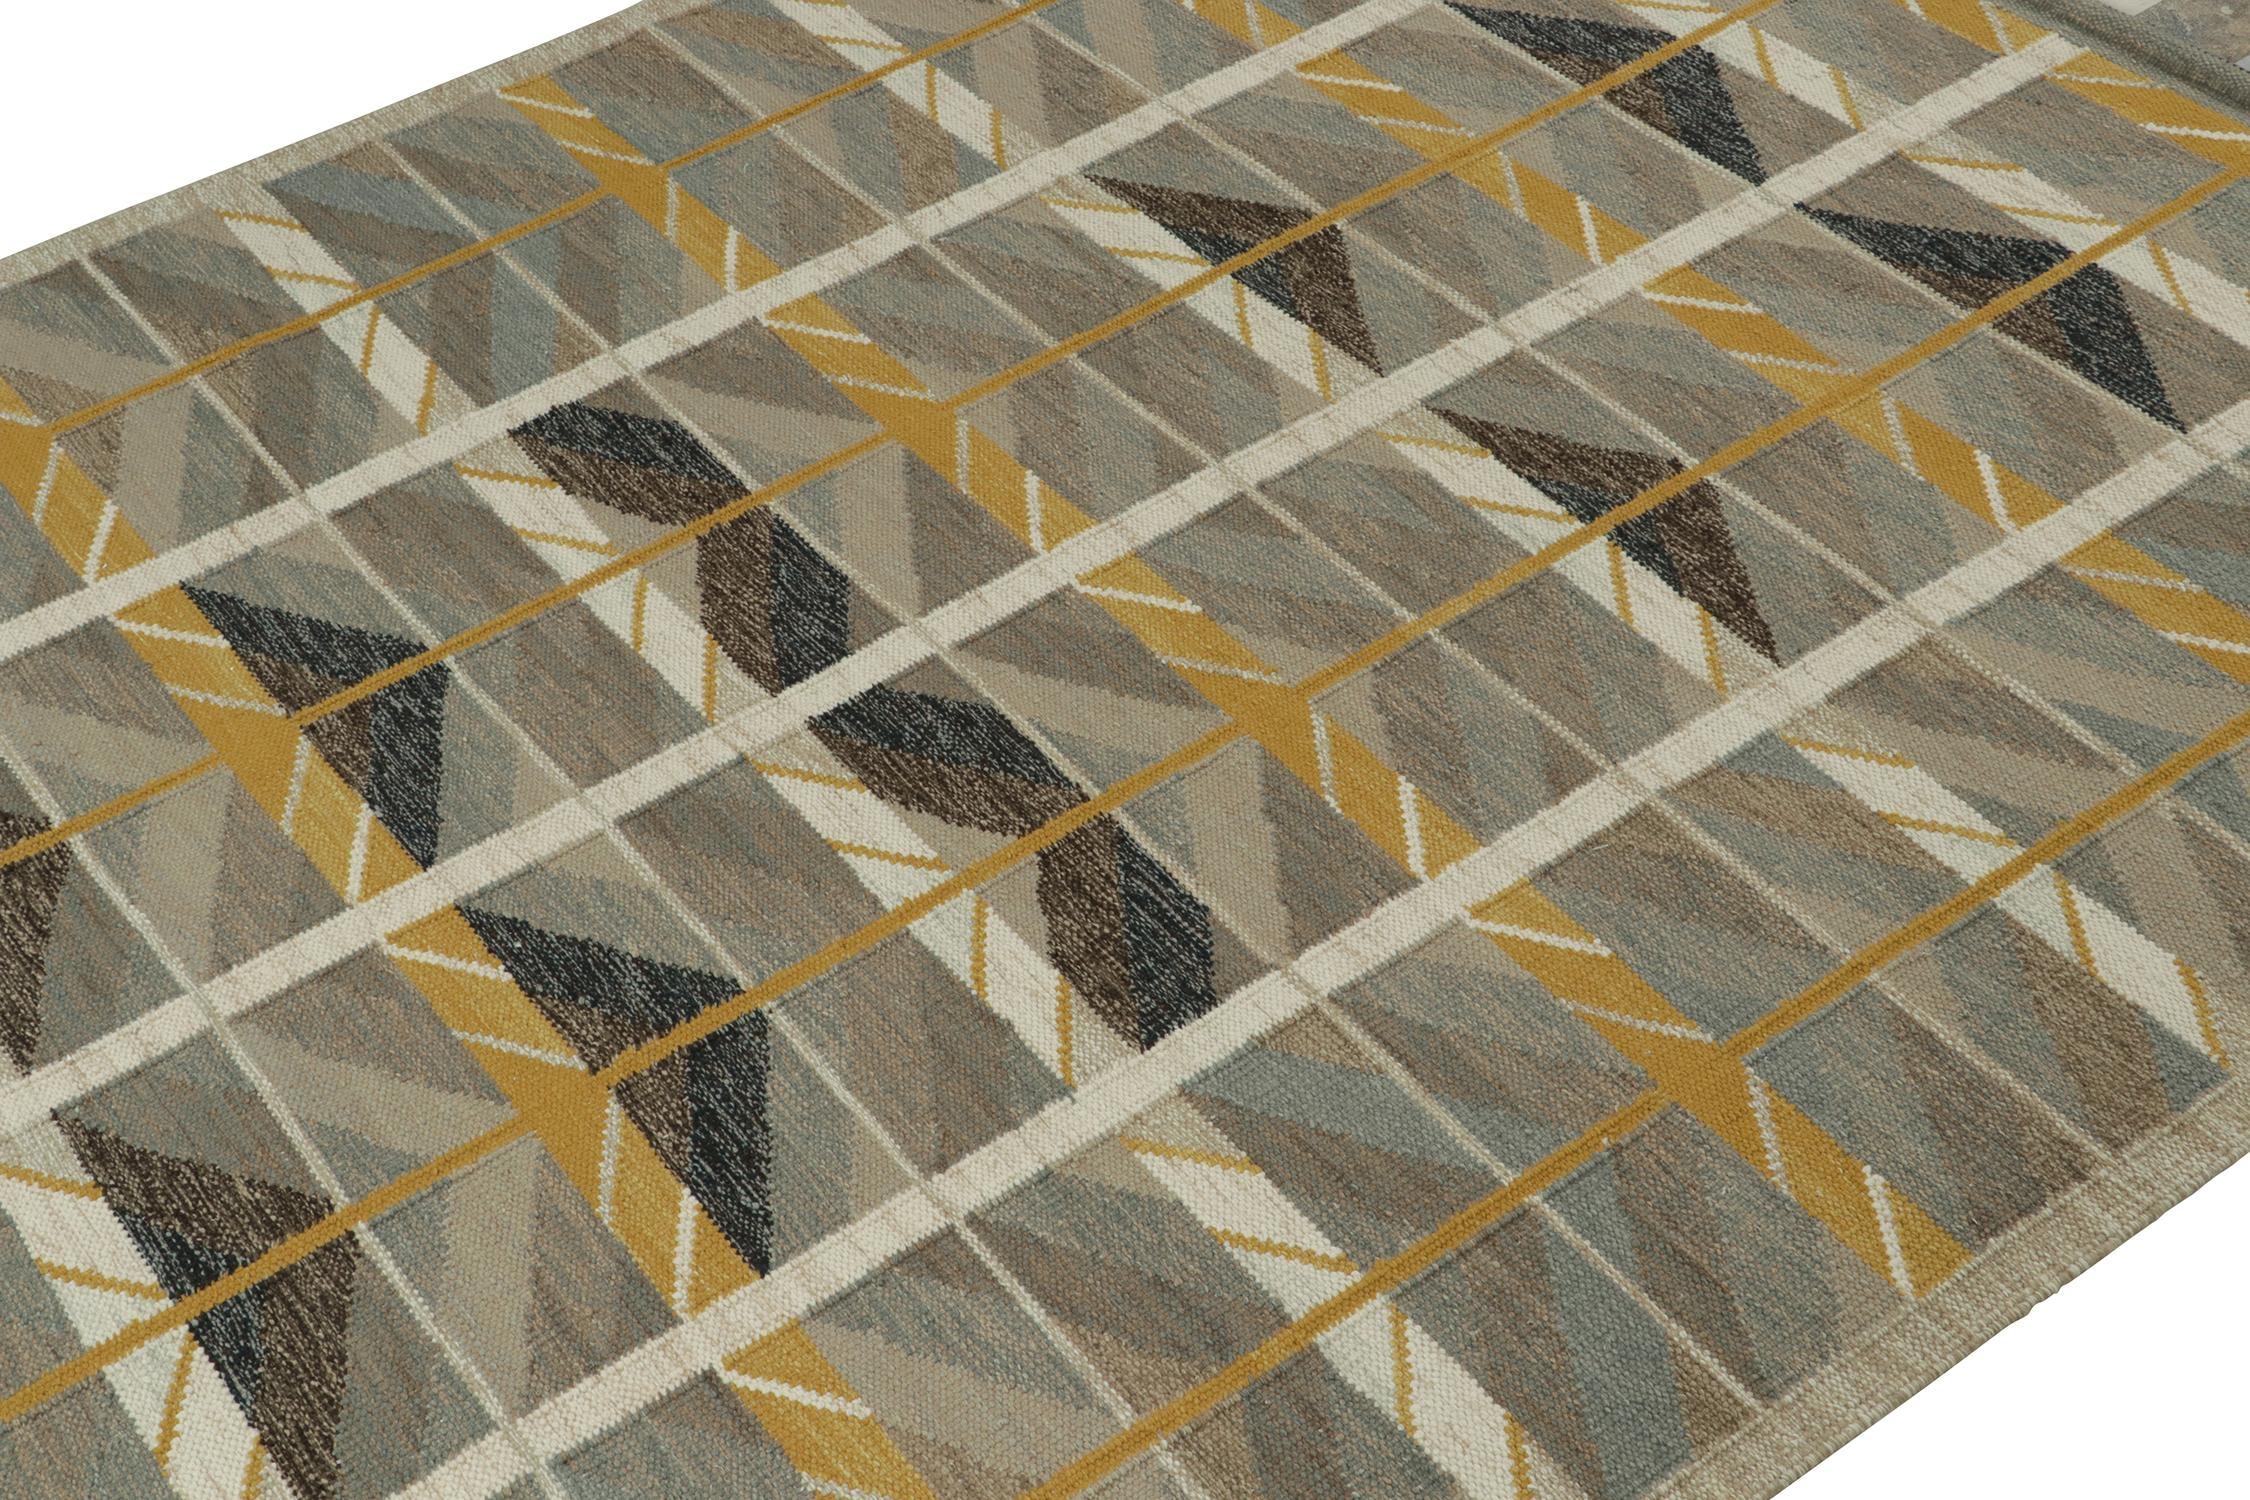 Indian Rug & Kilim’s Scandinavian Style Kilim Rug in Beige-Brown & Gold Geometric Patte For Sale